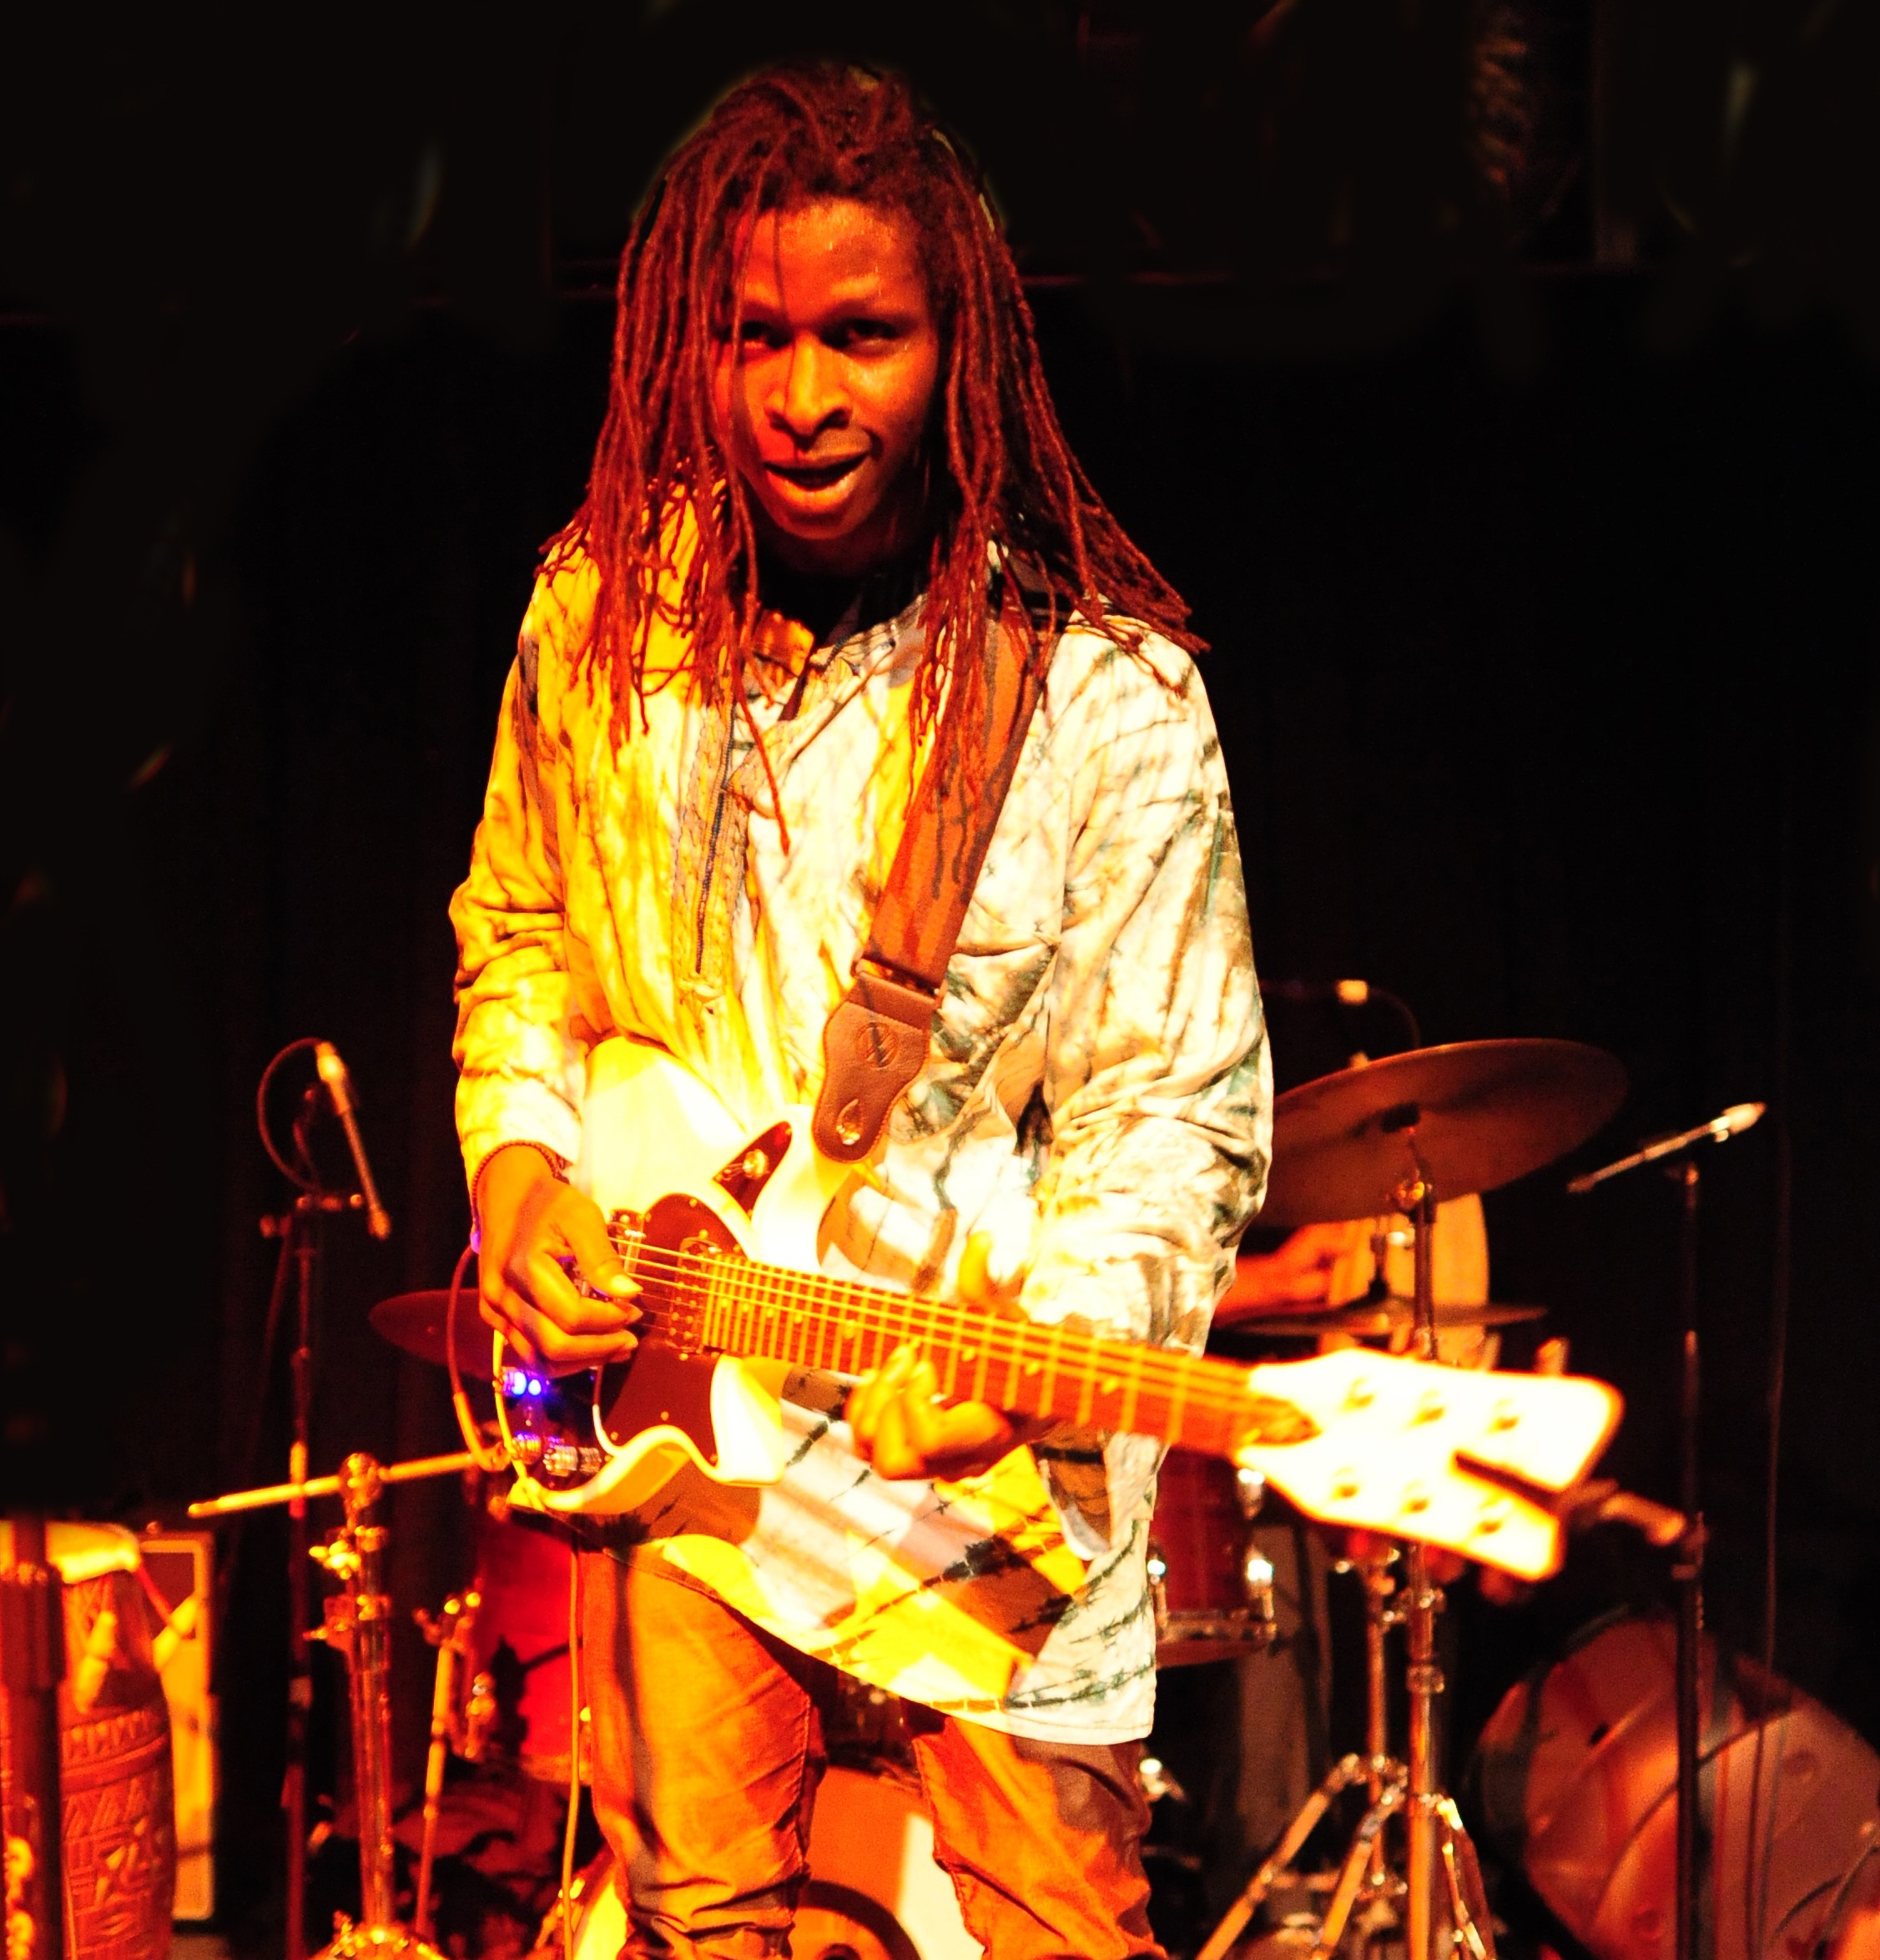 Ibrahim Kelly of Dusu Mali Band - PHOTO BY DT FLETCHER